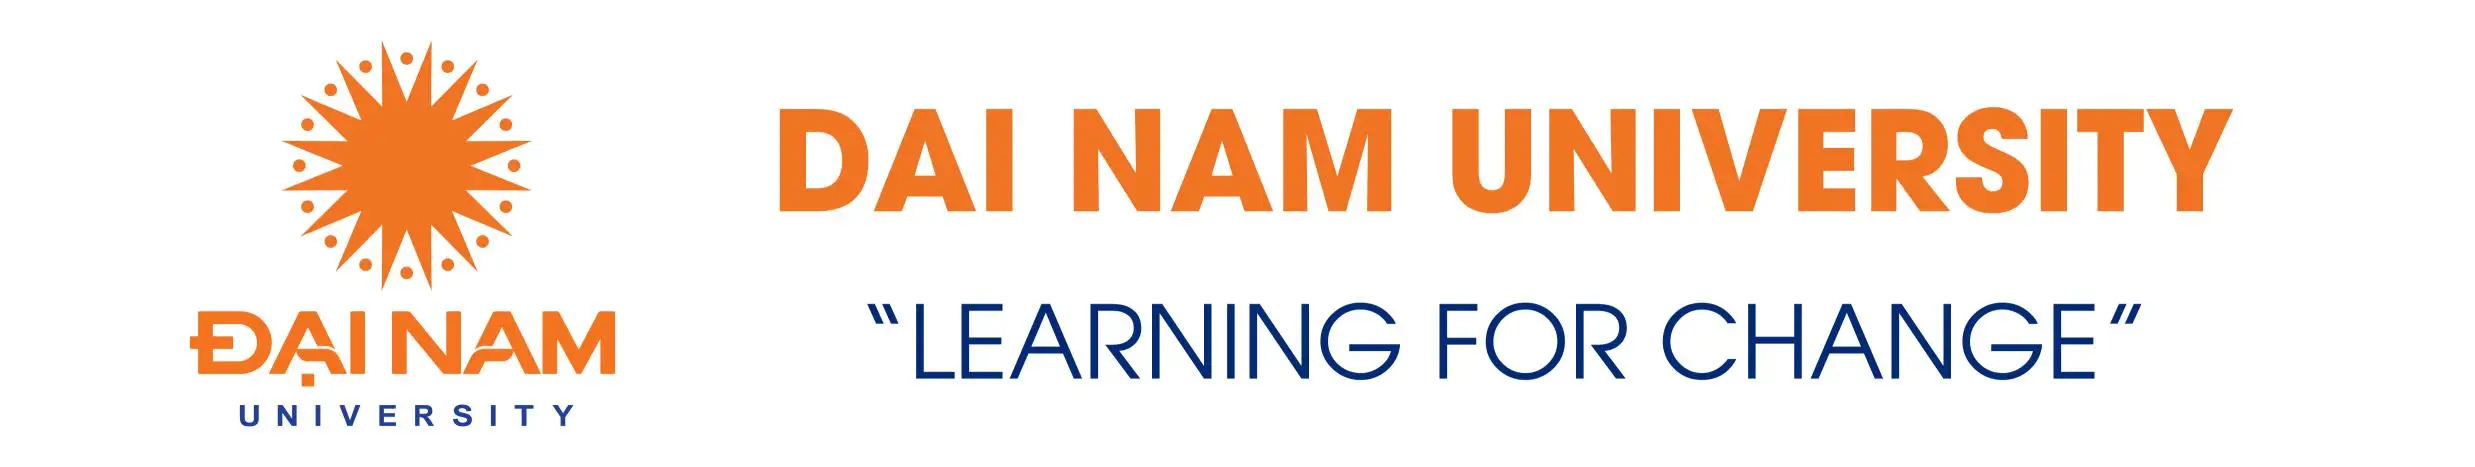 Dai Nam University Faculty of Medicine Vietnam logo